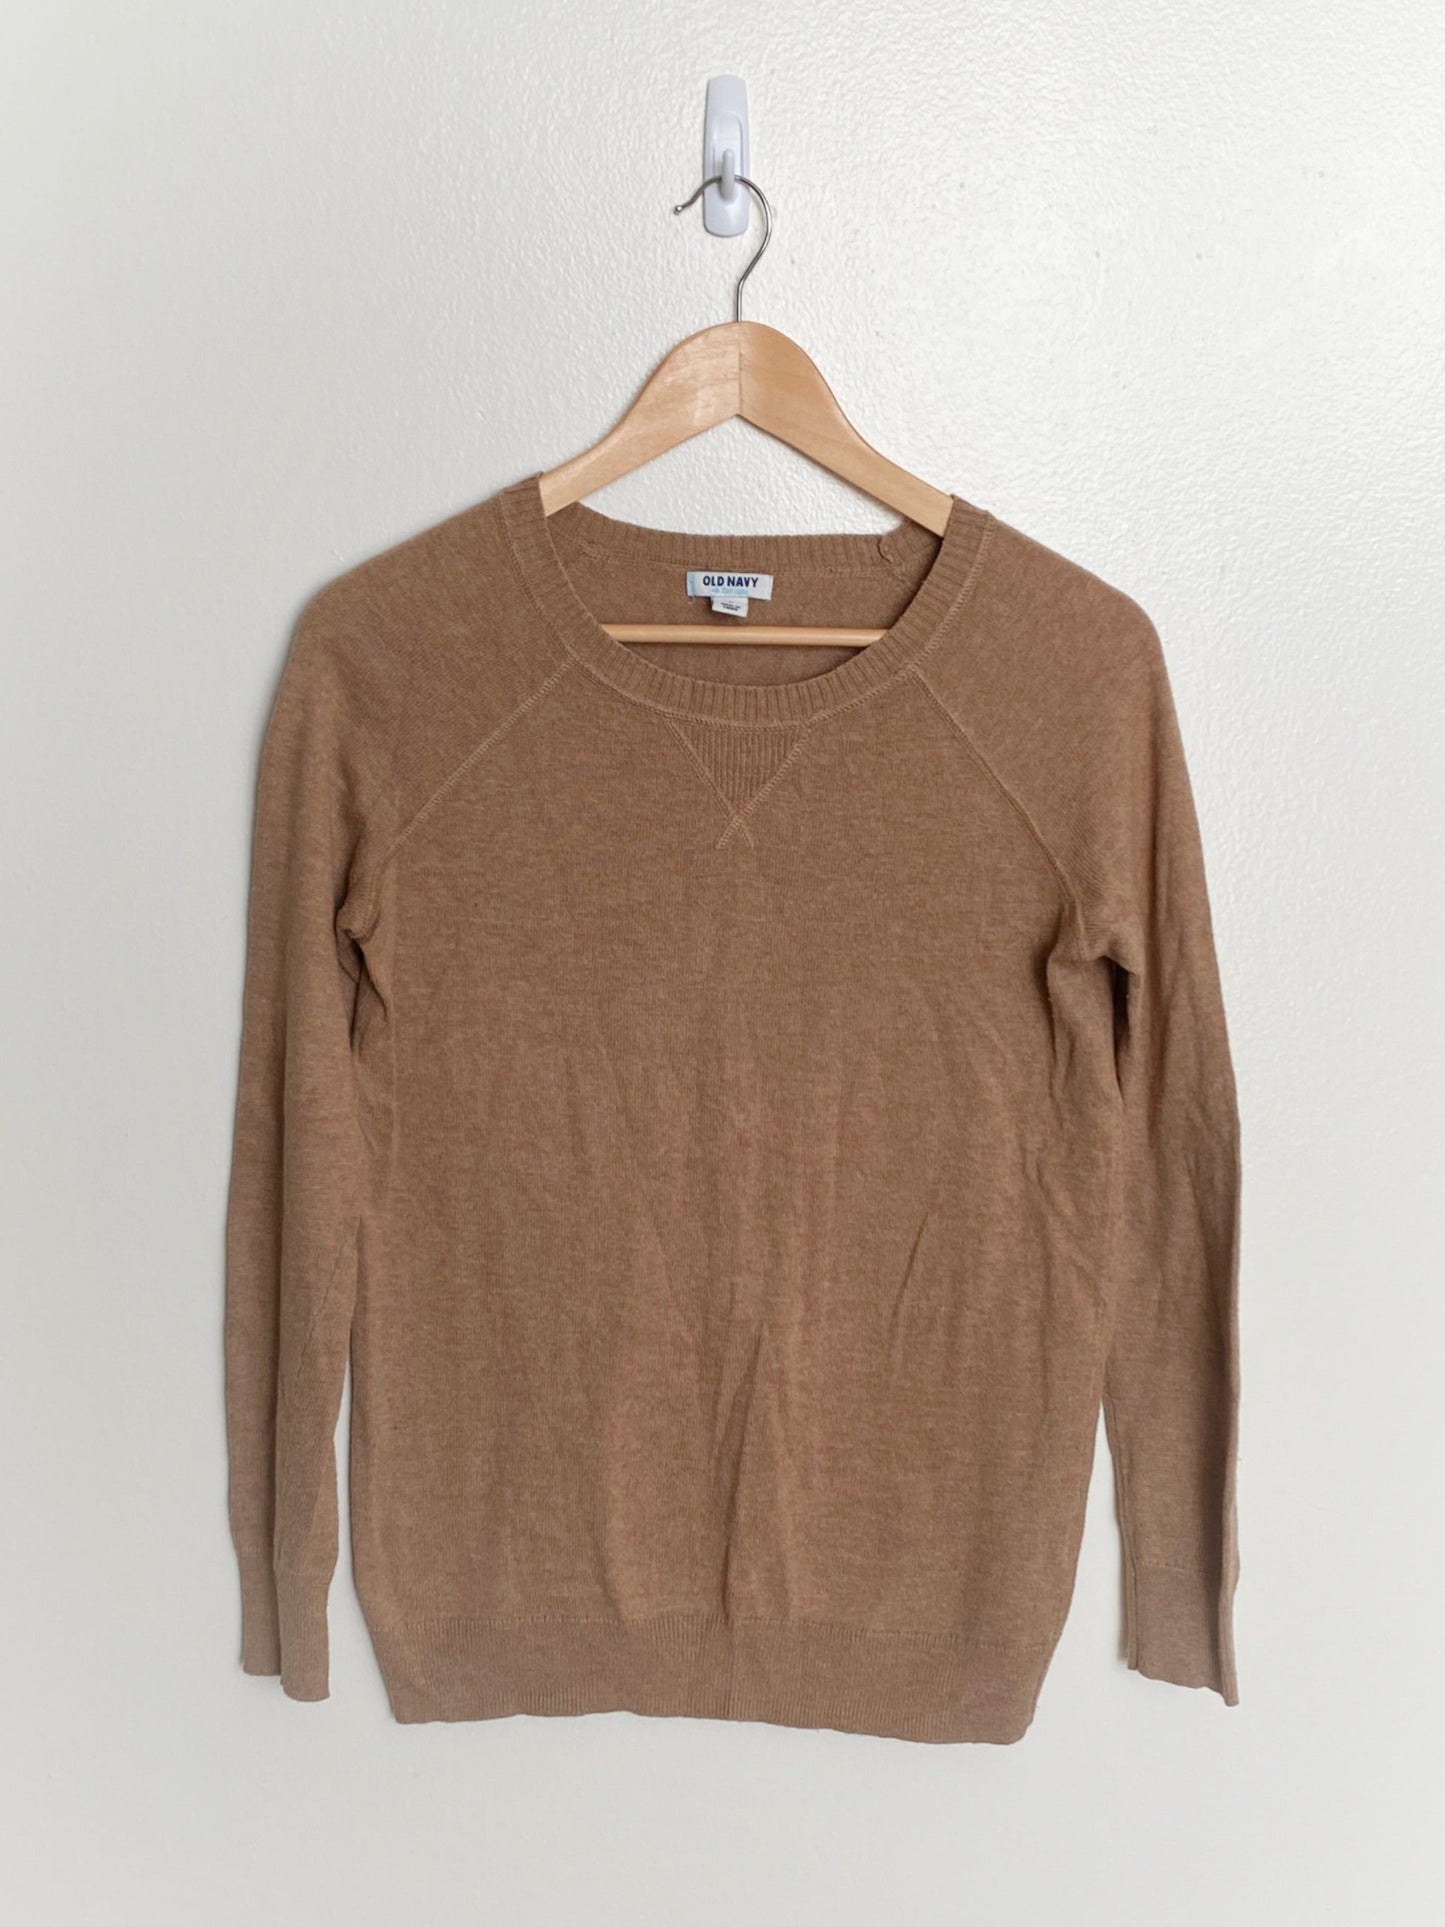 Tan Pullover Sweater (XS)